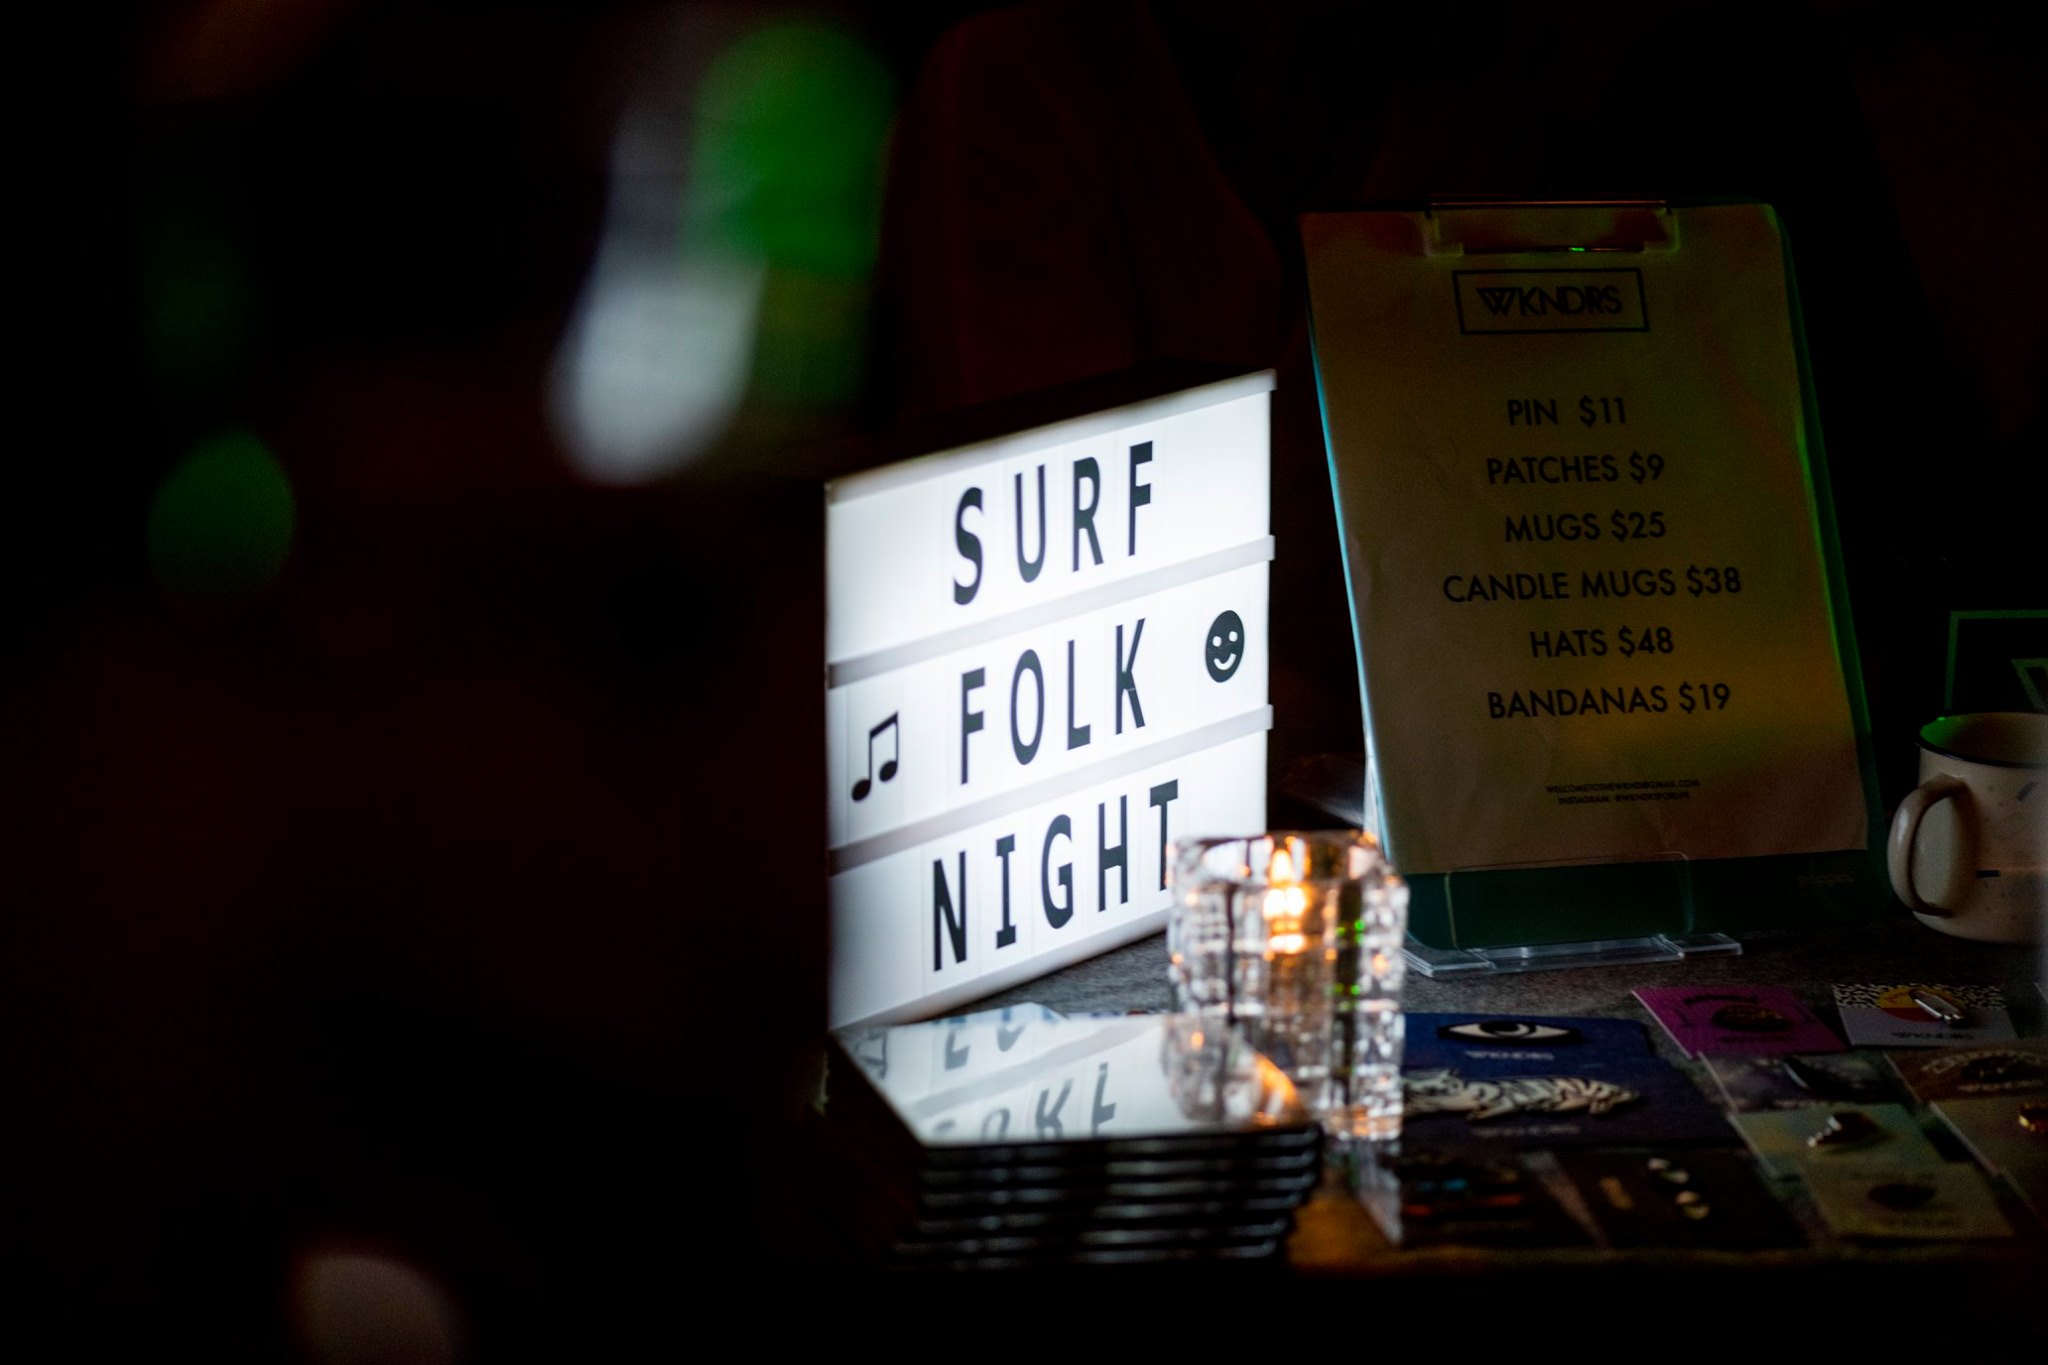 surf-folk-night32